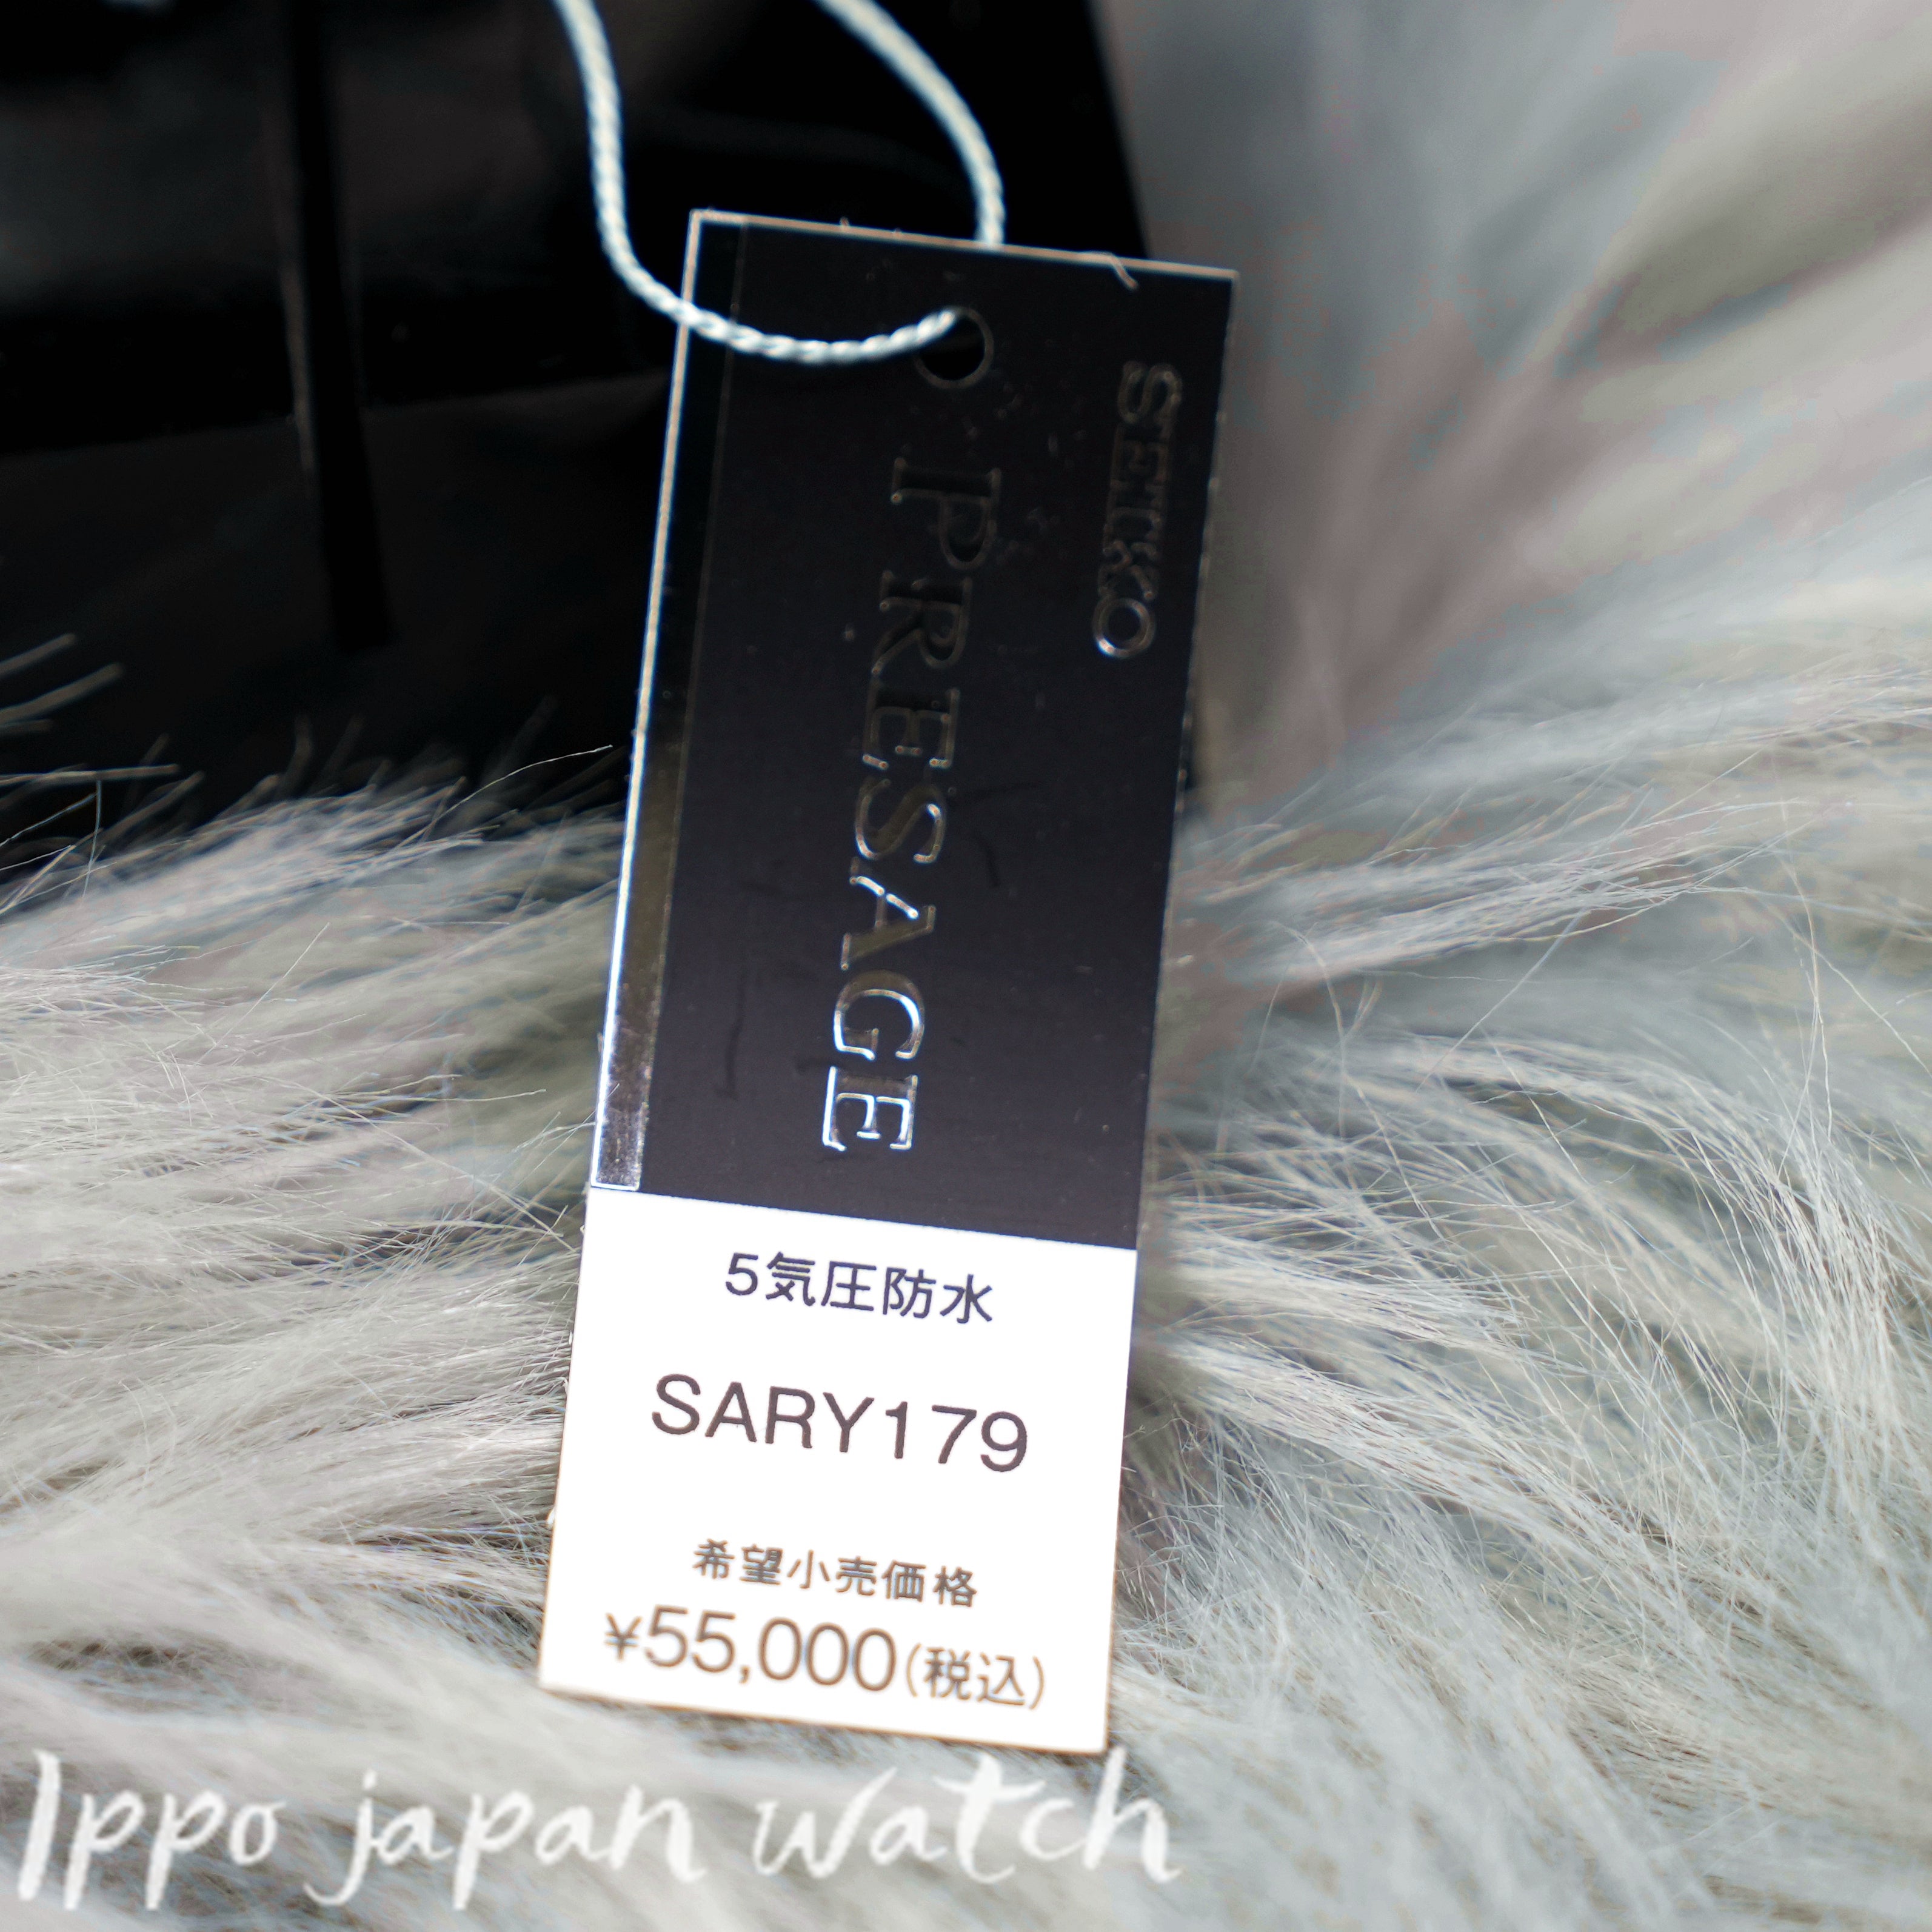 Seiko Presage SARY179 SRPF39J1 Enhanced waterproofing for daily life 5 bar Mechanical self-winding Watch - IPPO JAPAN WATCH 